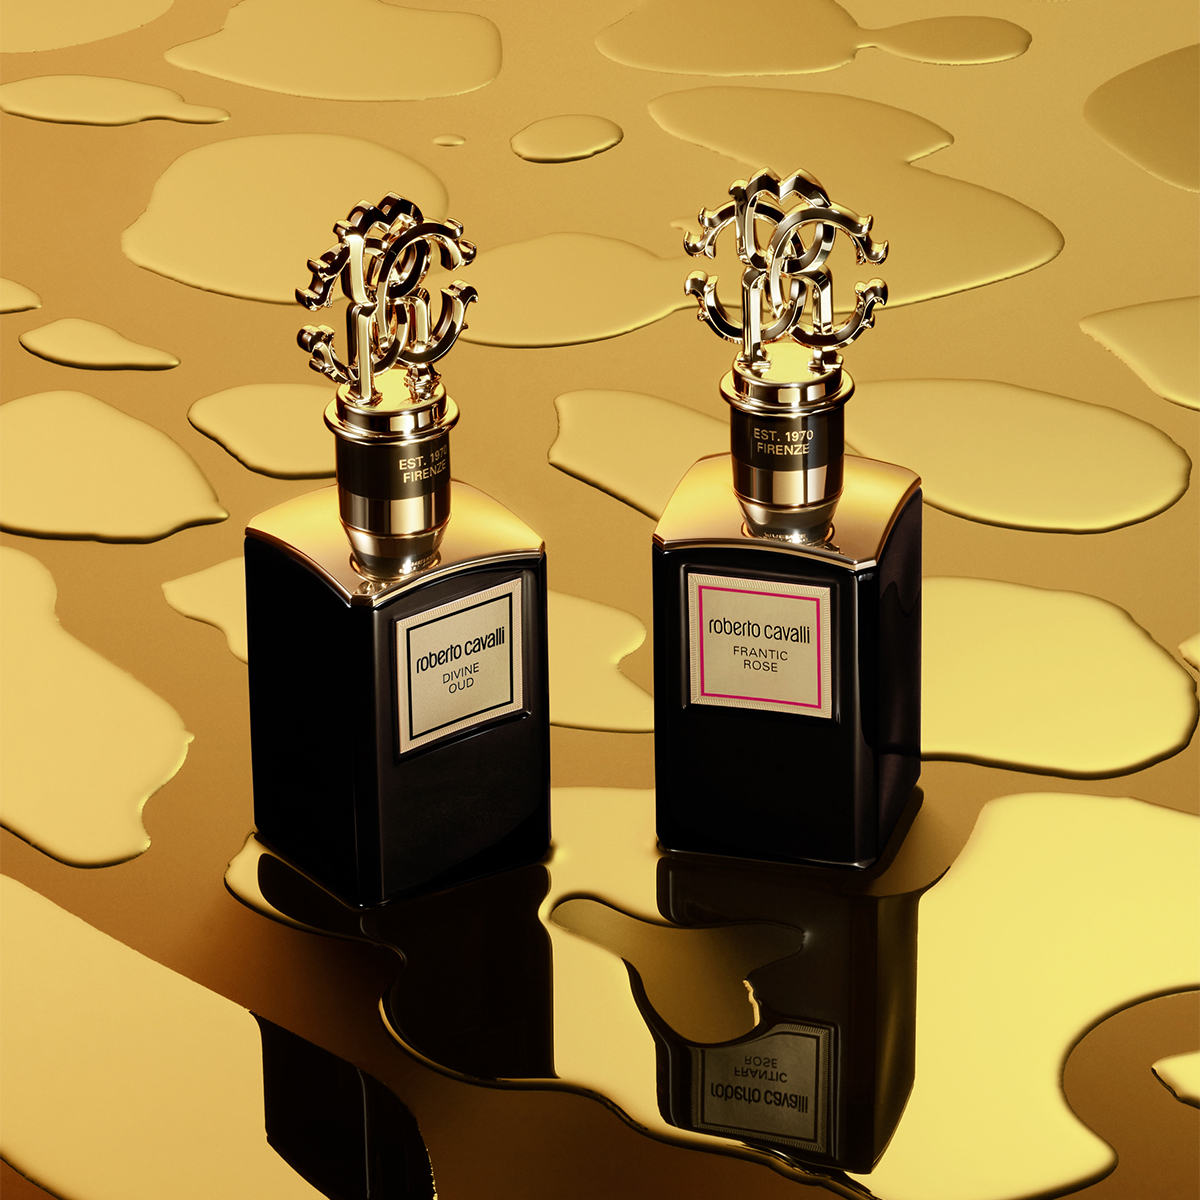 Roberto Cavalli Frantic Rose Gold Collection Eau de Parfum 100ml